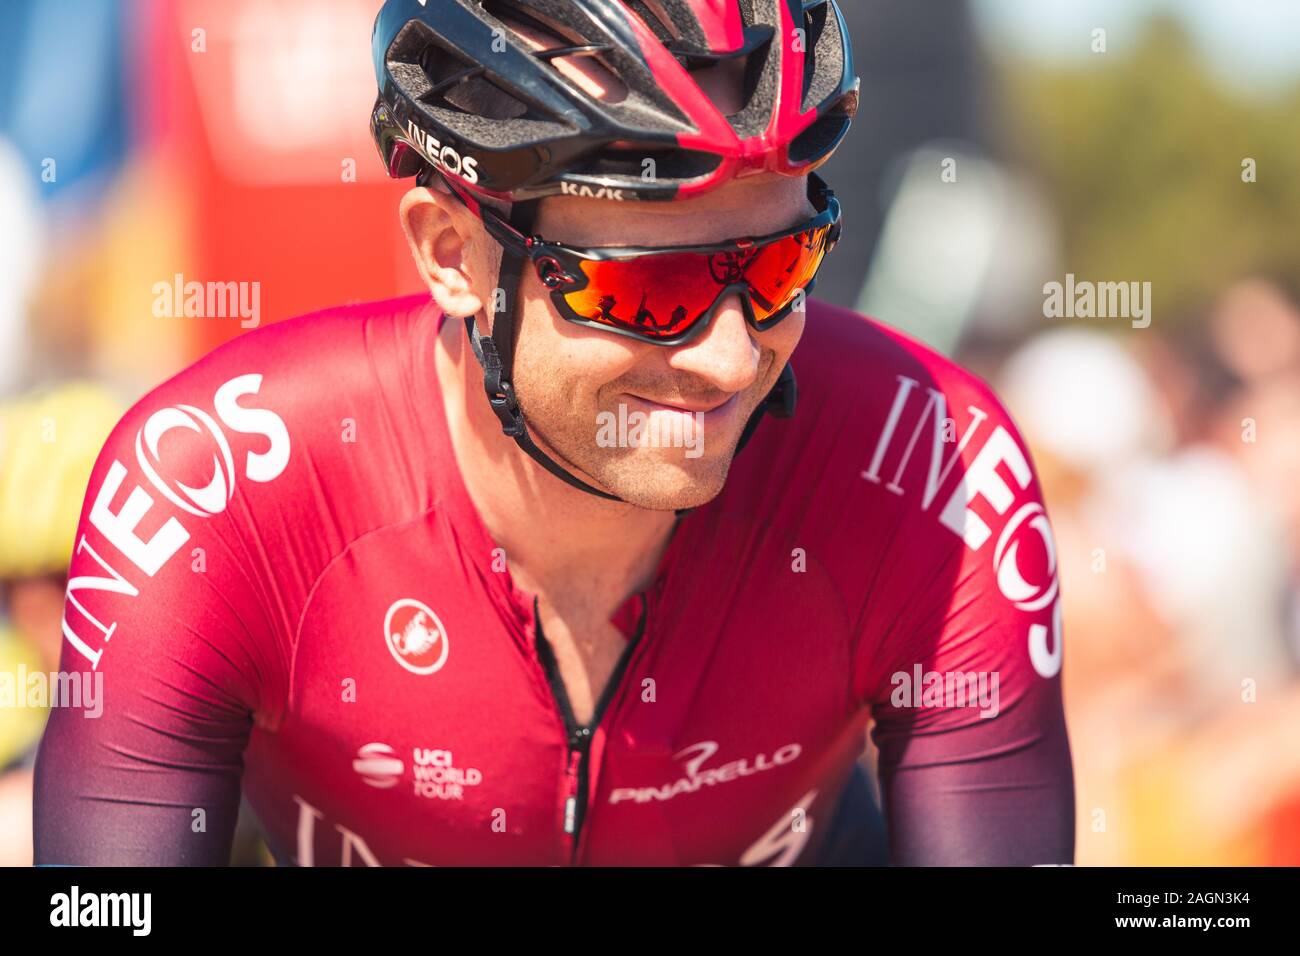 San Vicente de la Barquera, Spain-September 7, 2019: Ian STANNARD, cyclist of the TEAM INEOS during stage 14 of La Vuelta a España. Stock Photo